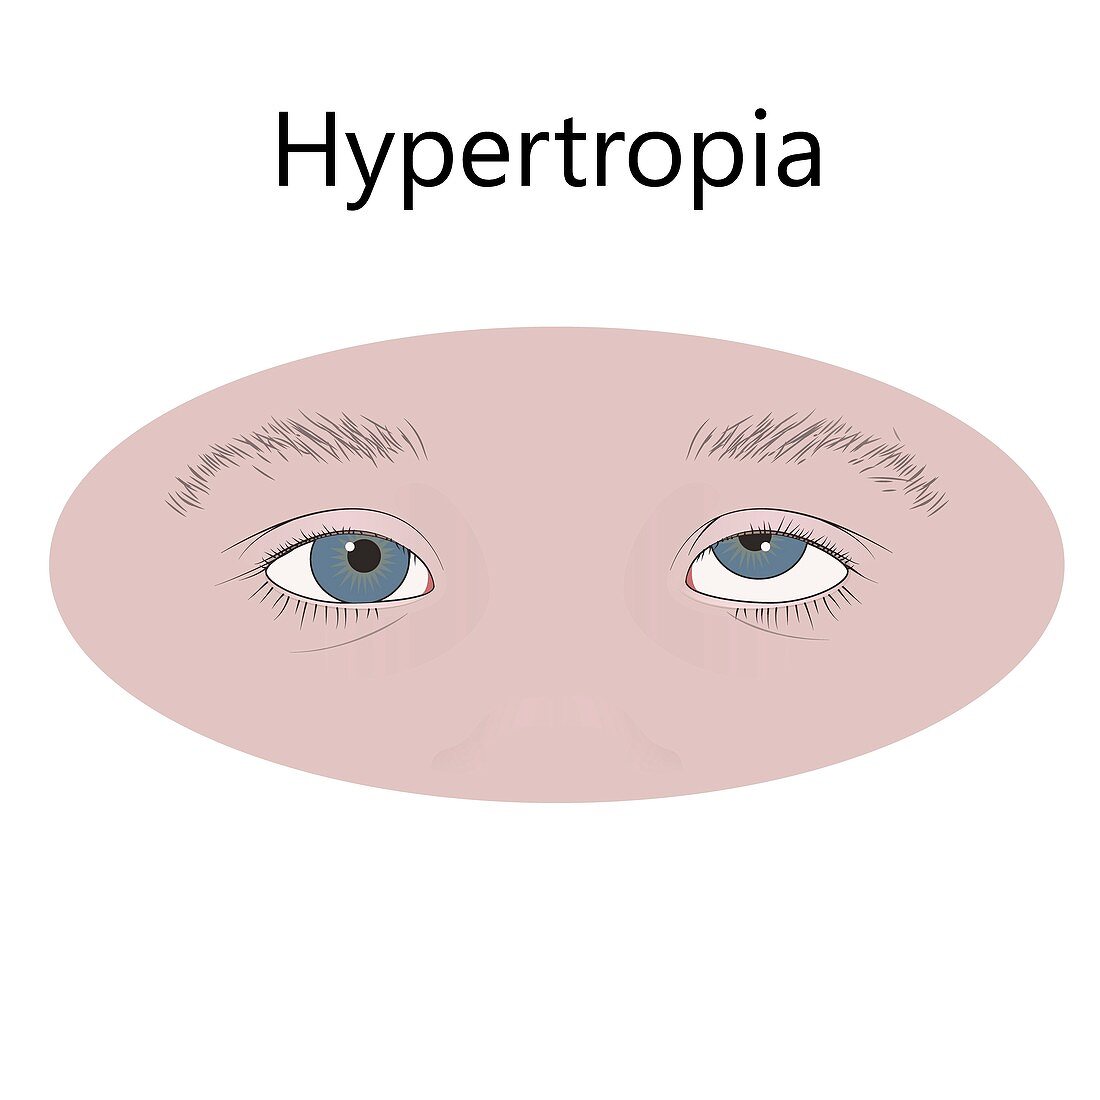 Childhood hypertropia, illustration